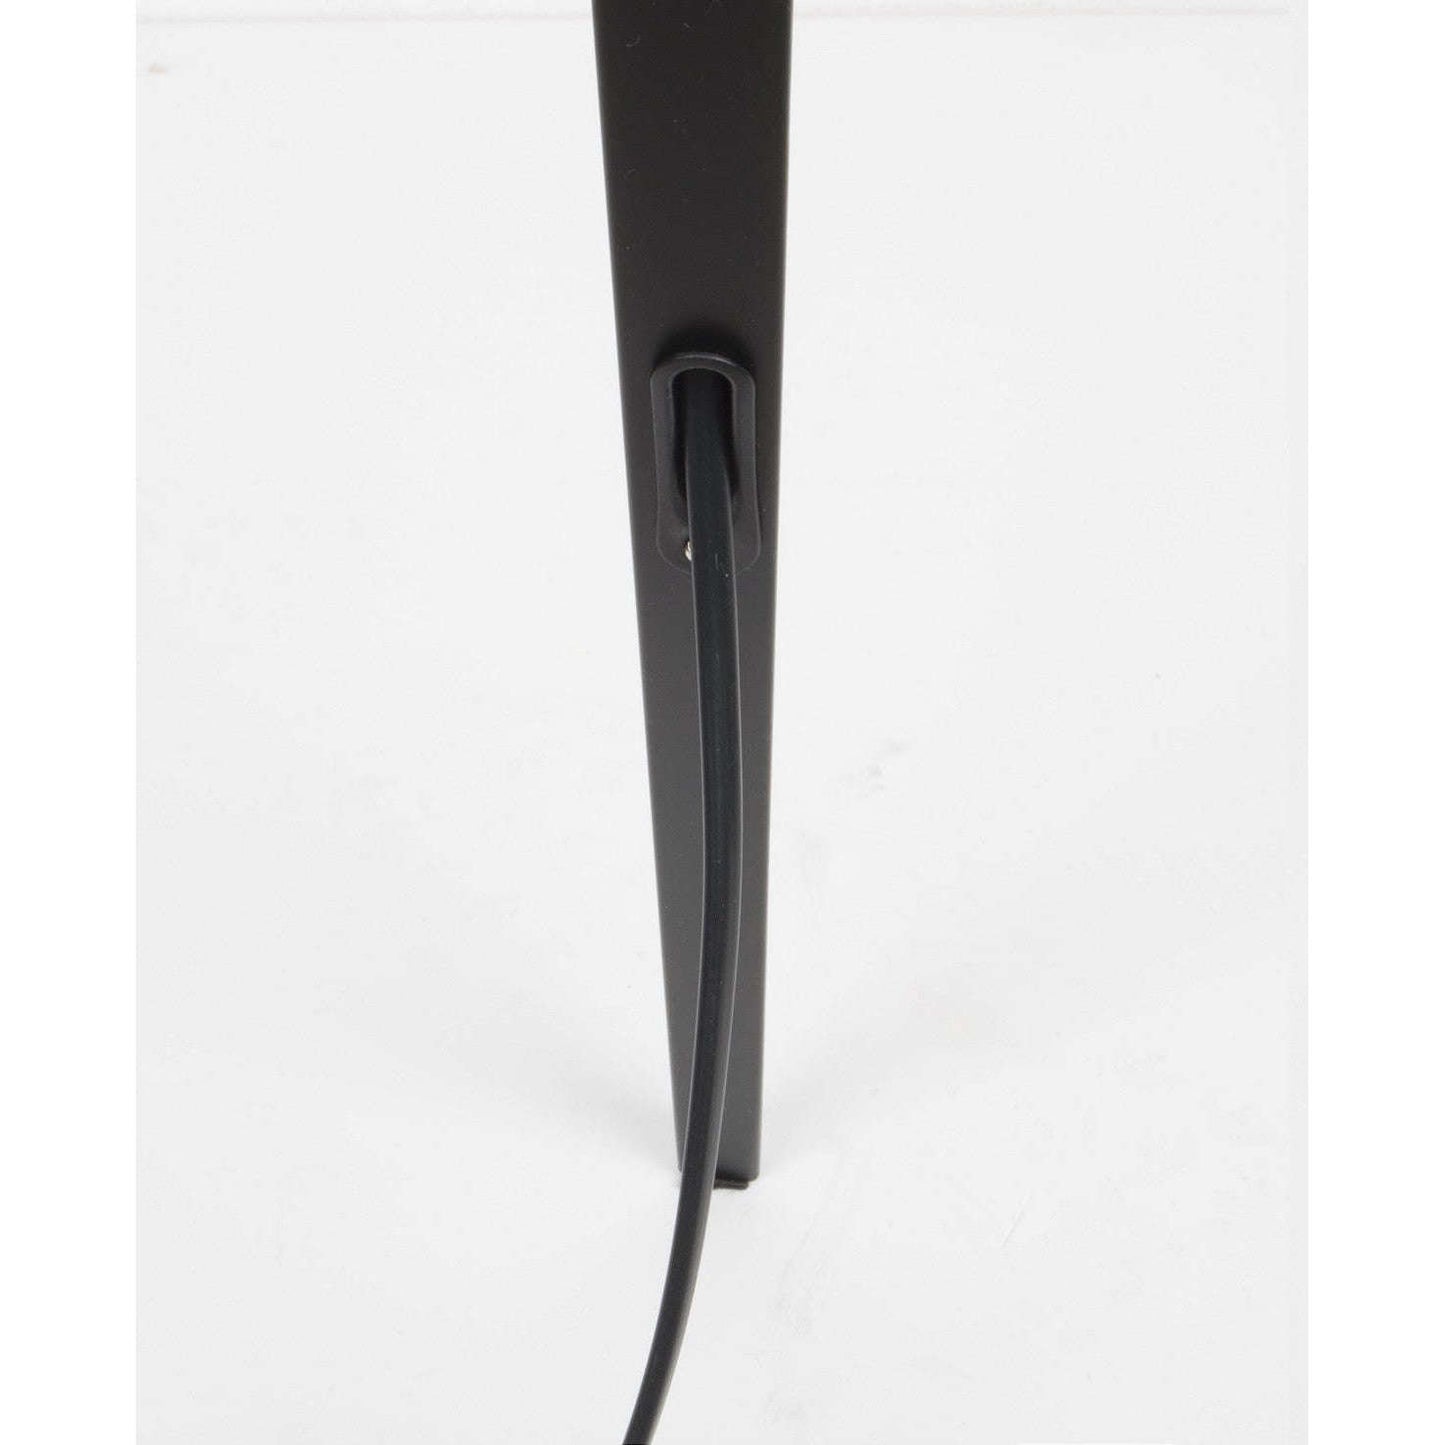 Zuiver vloerlamp tripod zwart/grijs Ø50 x 157 cm